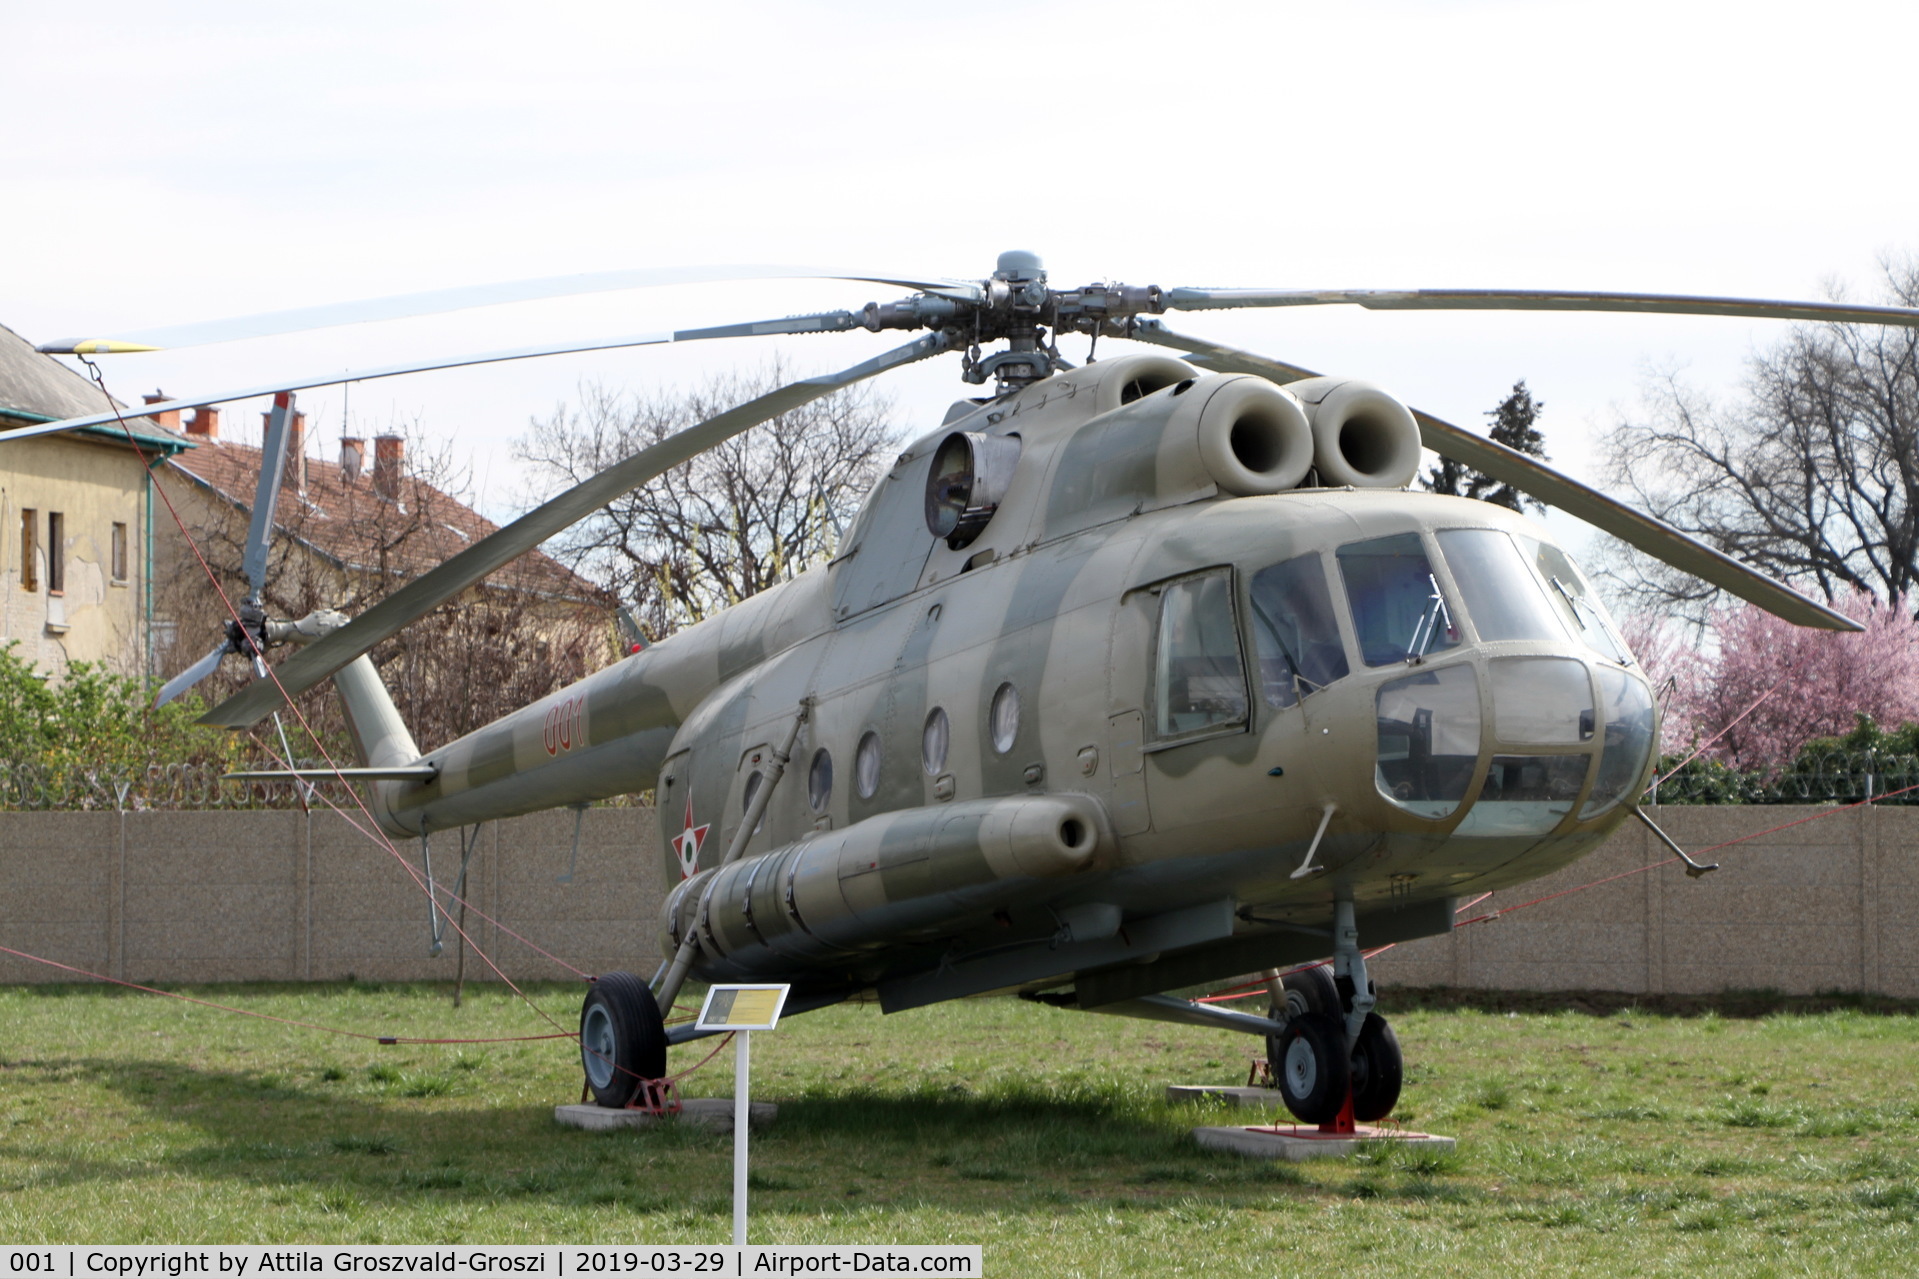 001, 1983 Mil Mi-9 C/N 001, RepTár. Szolnok aviation history museum, Hungary